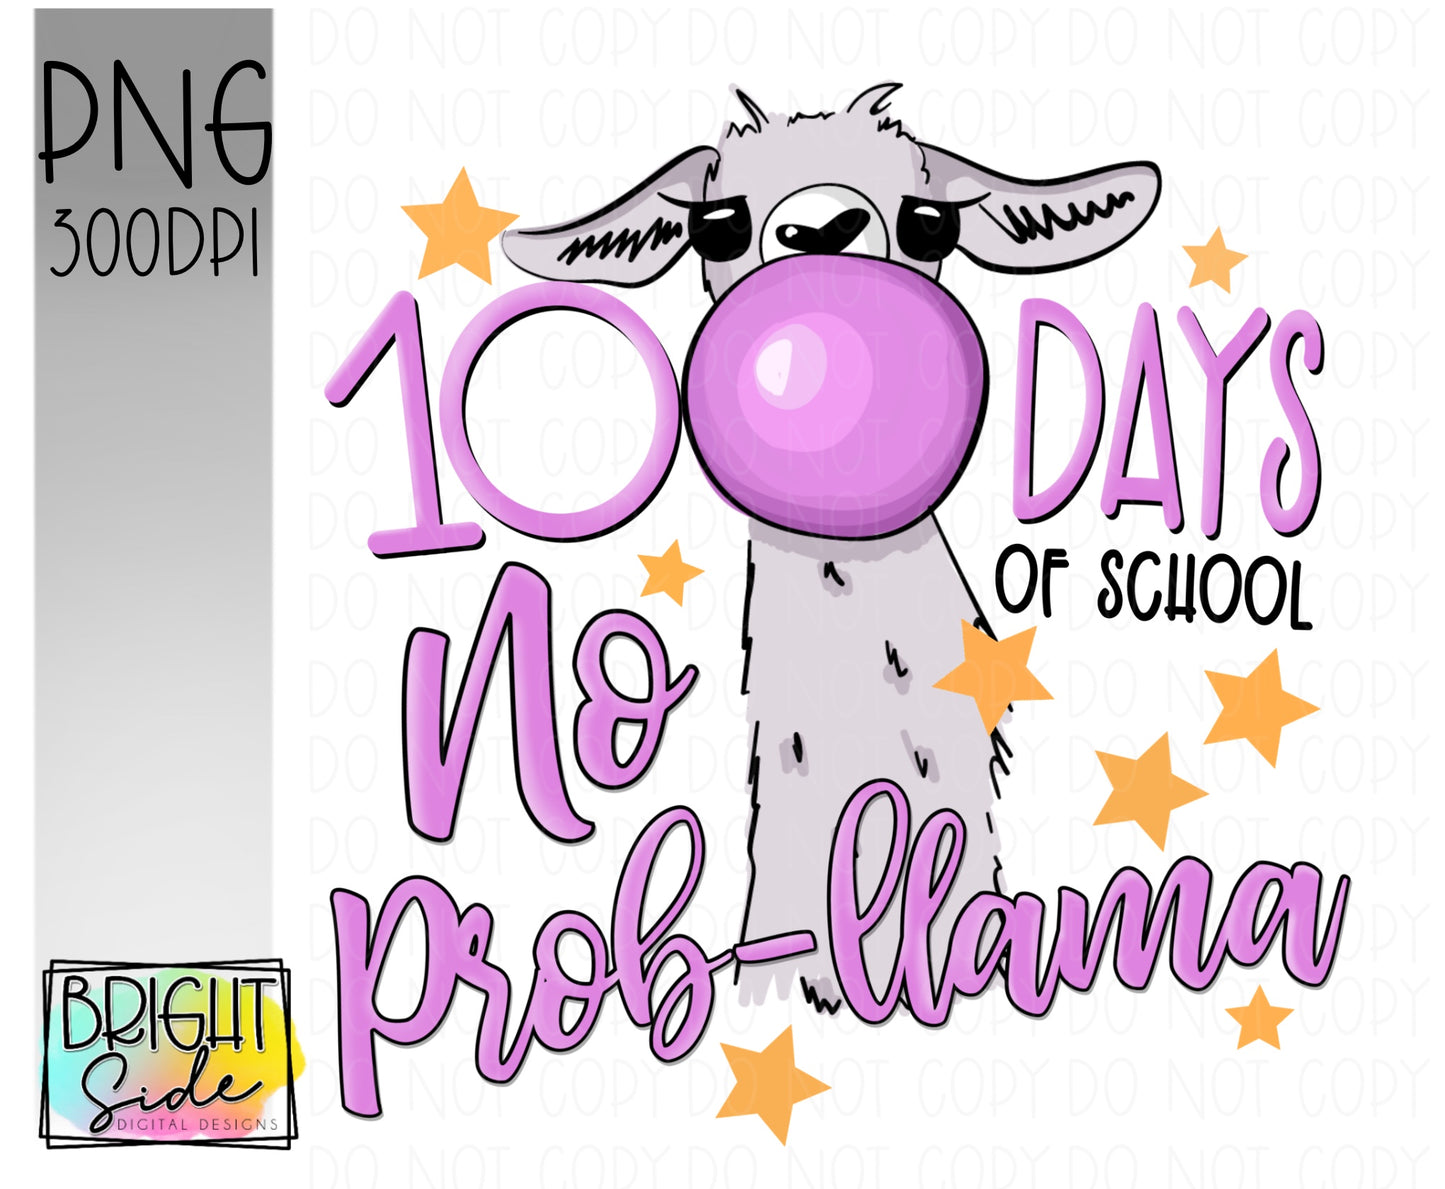 100 days No prob-llama